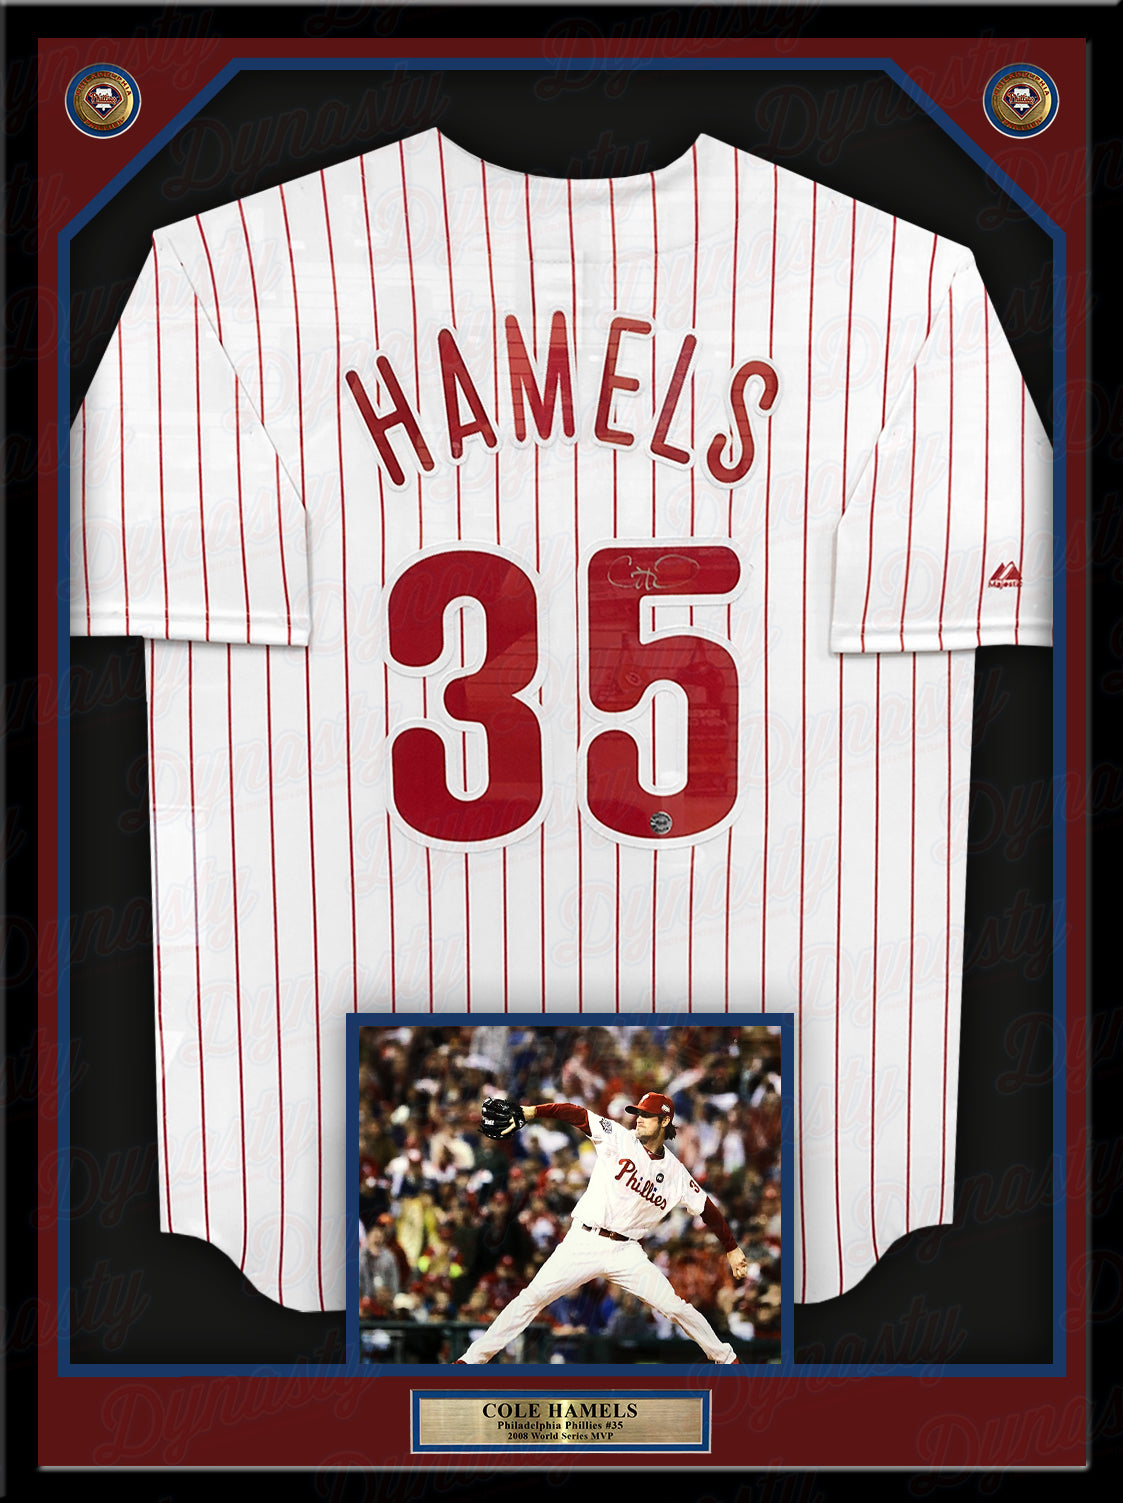 Cole Hamels 2008 Philadelphia Phillies World Series Home/Road/Alt